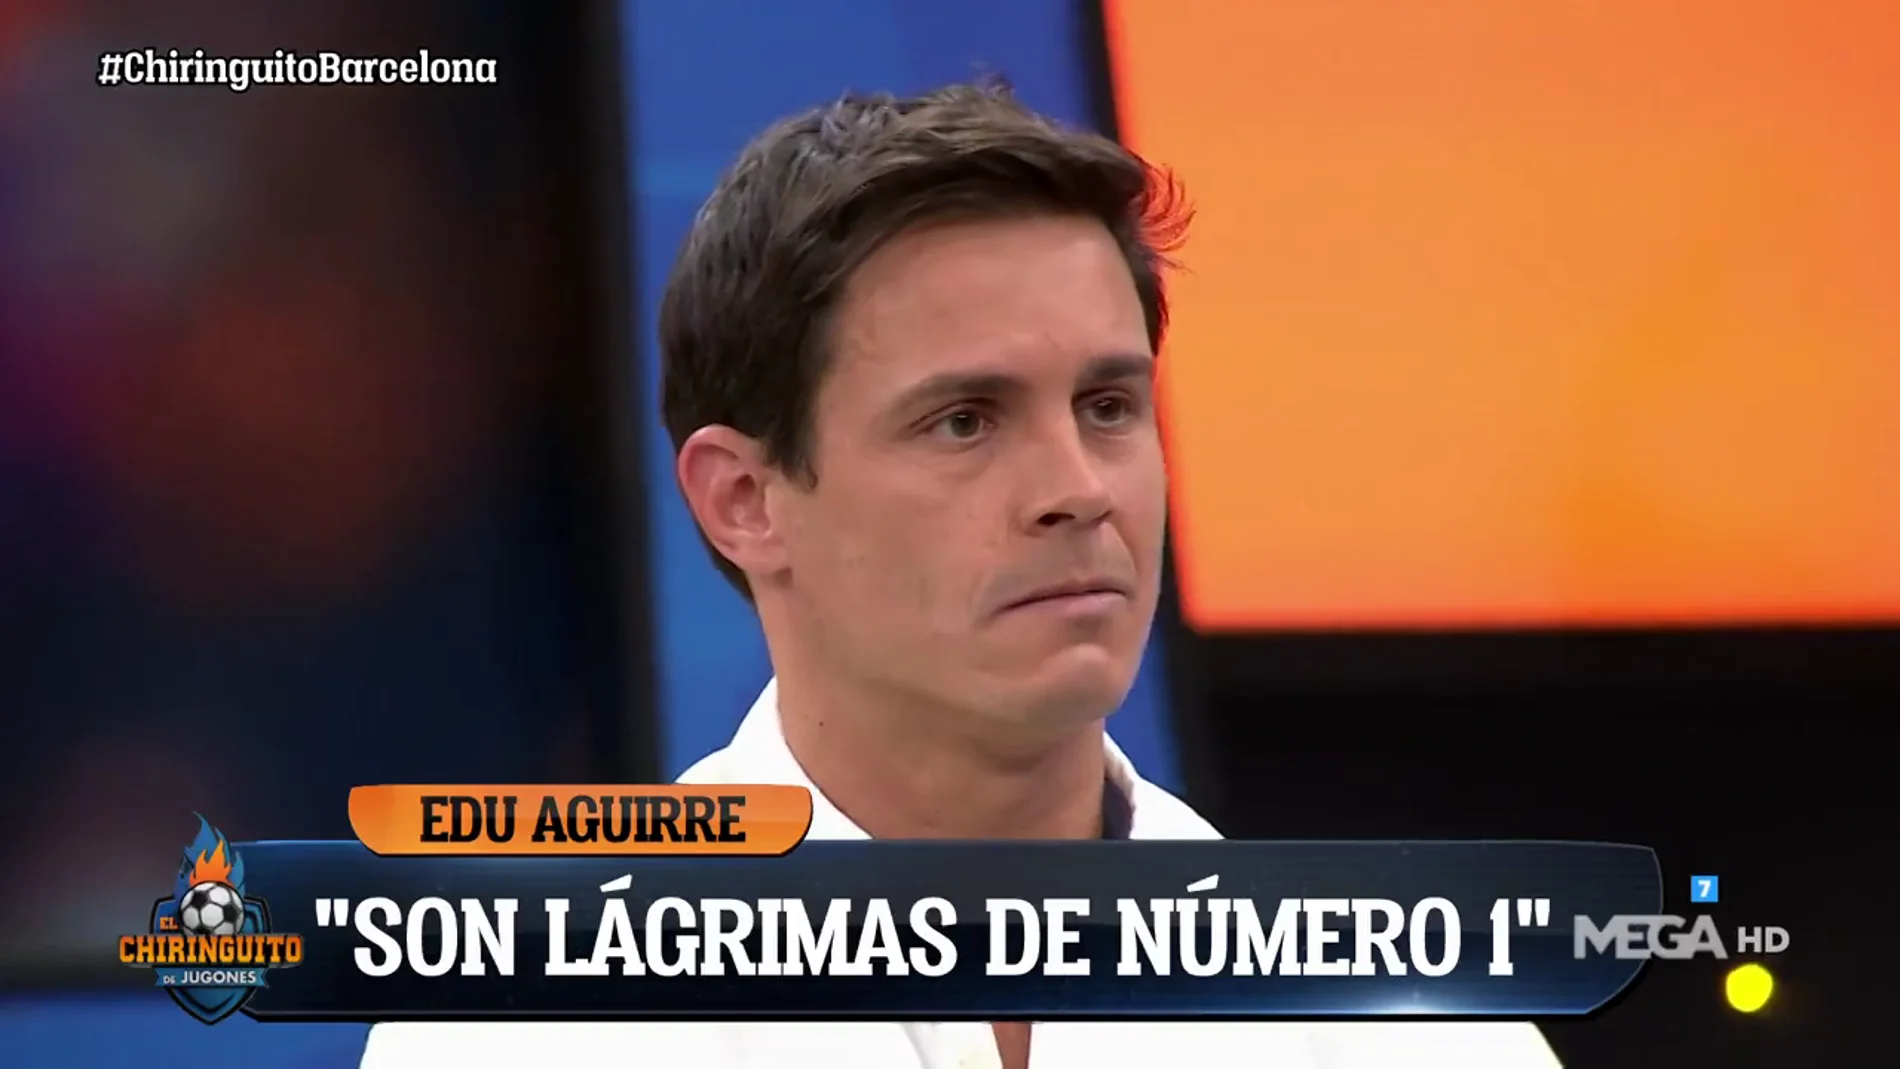 Edu Aguirre: "Las lágrimas de Ferran son d nº1"